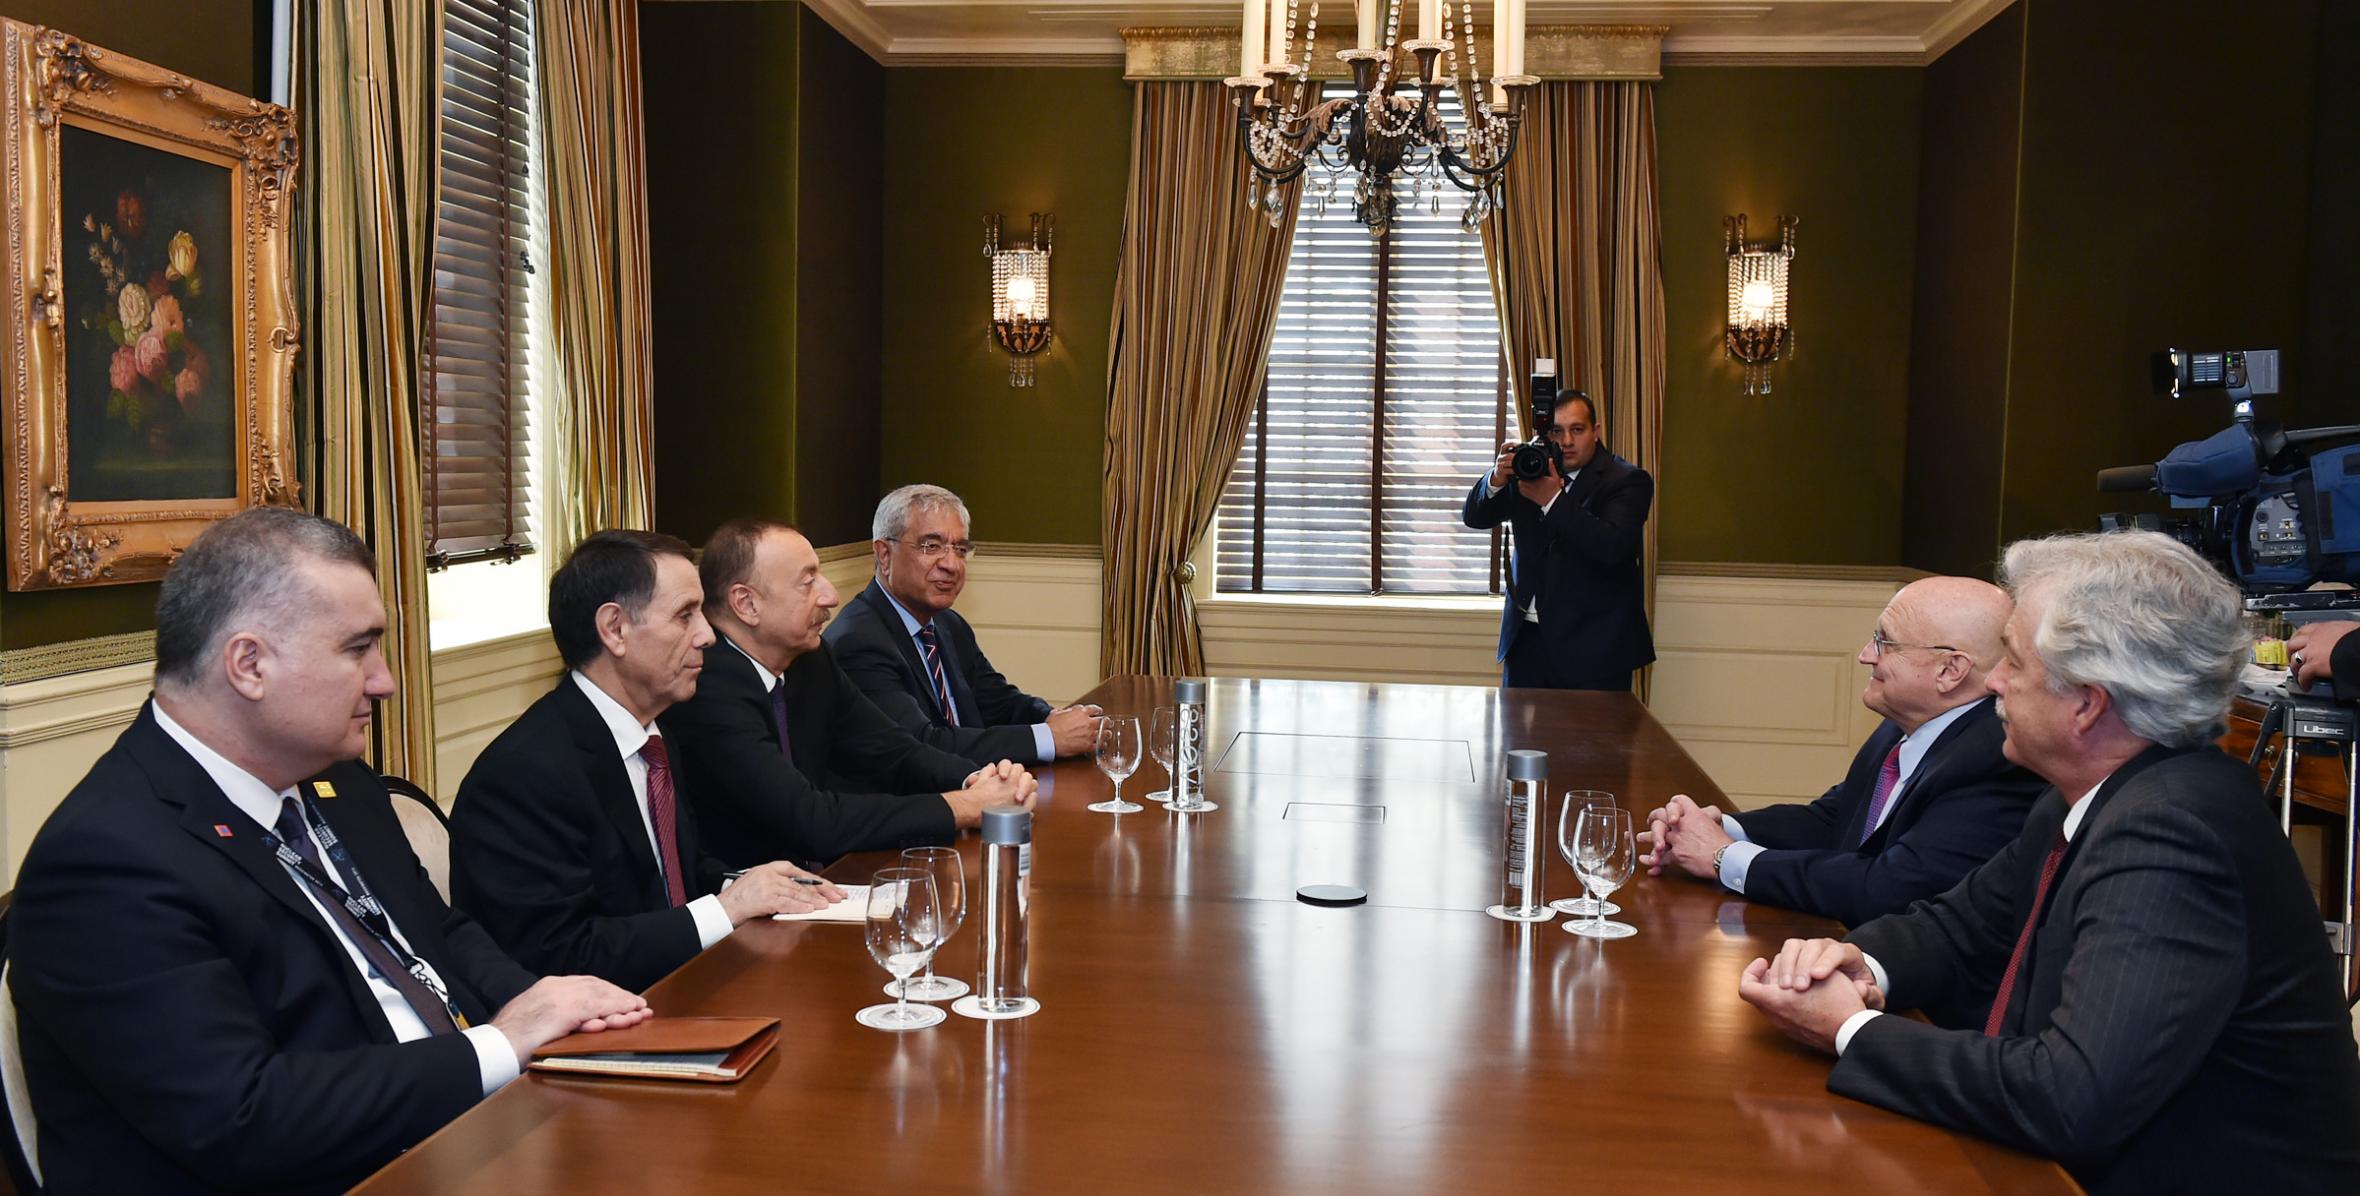 Ilham Aliyev met with US public figures